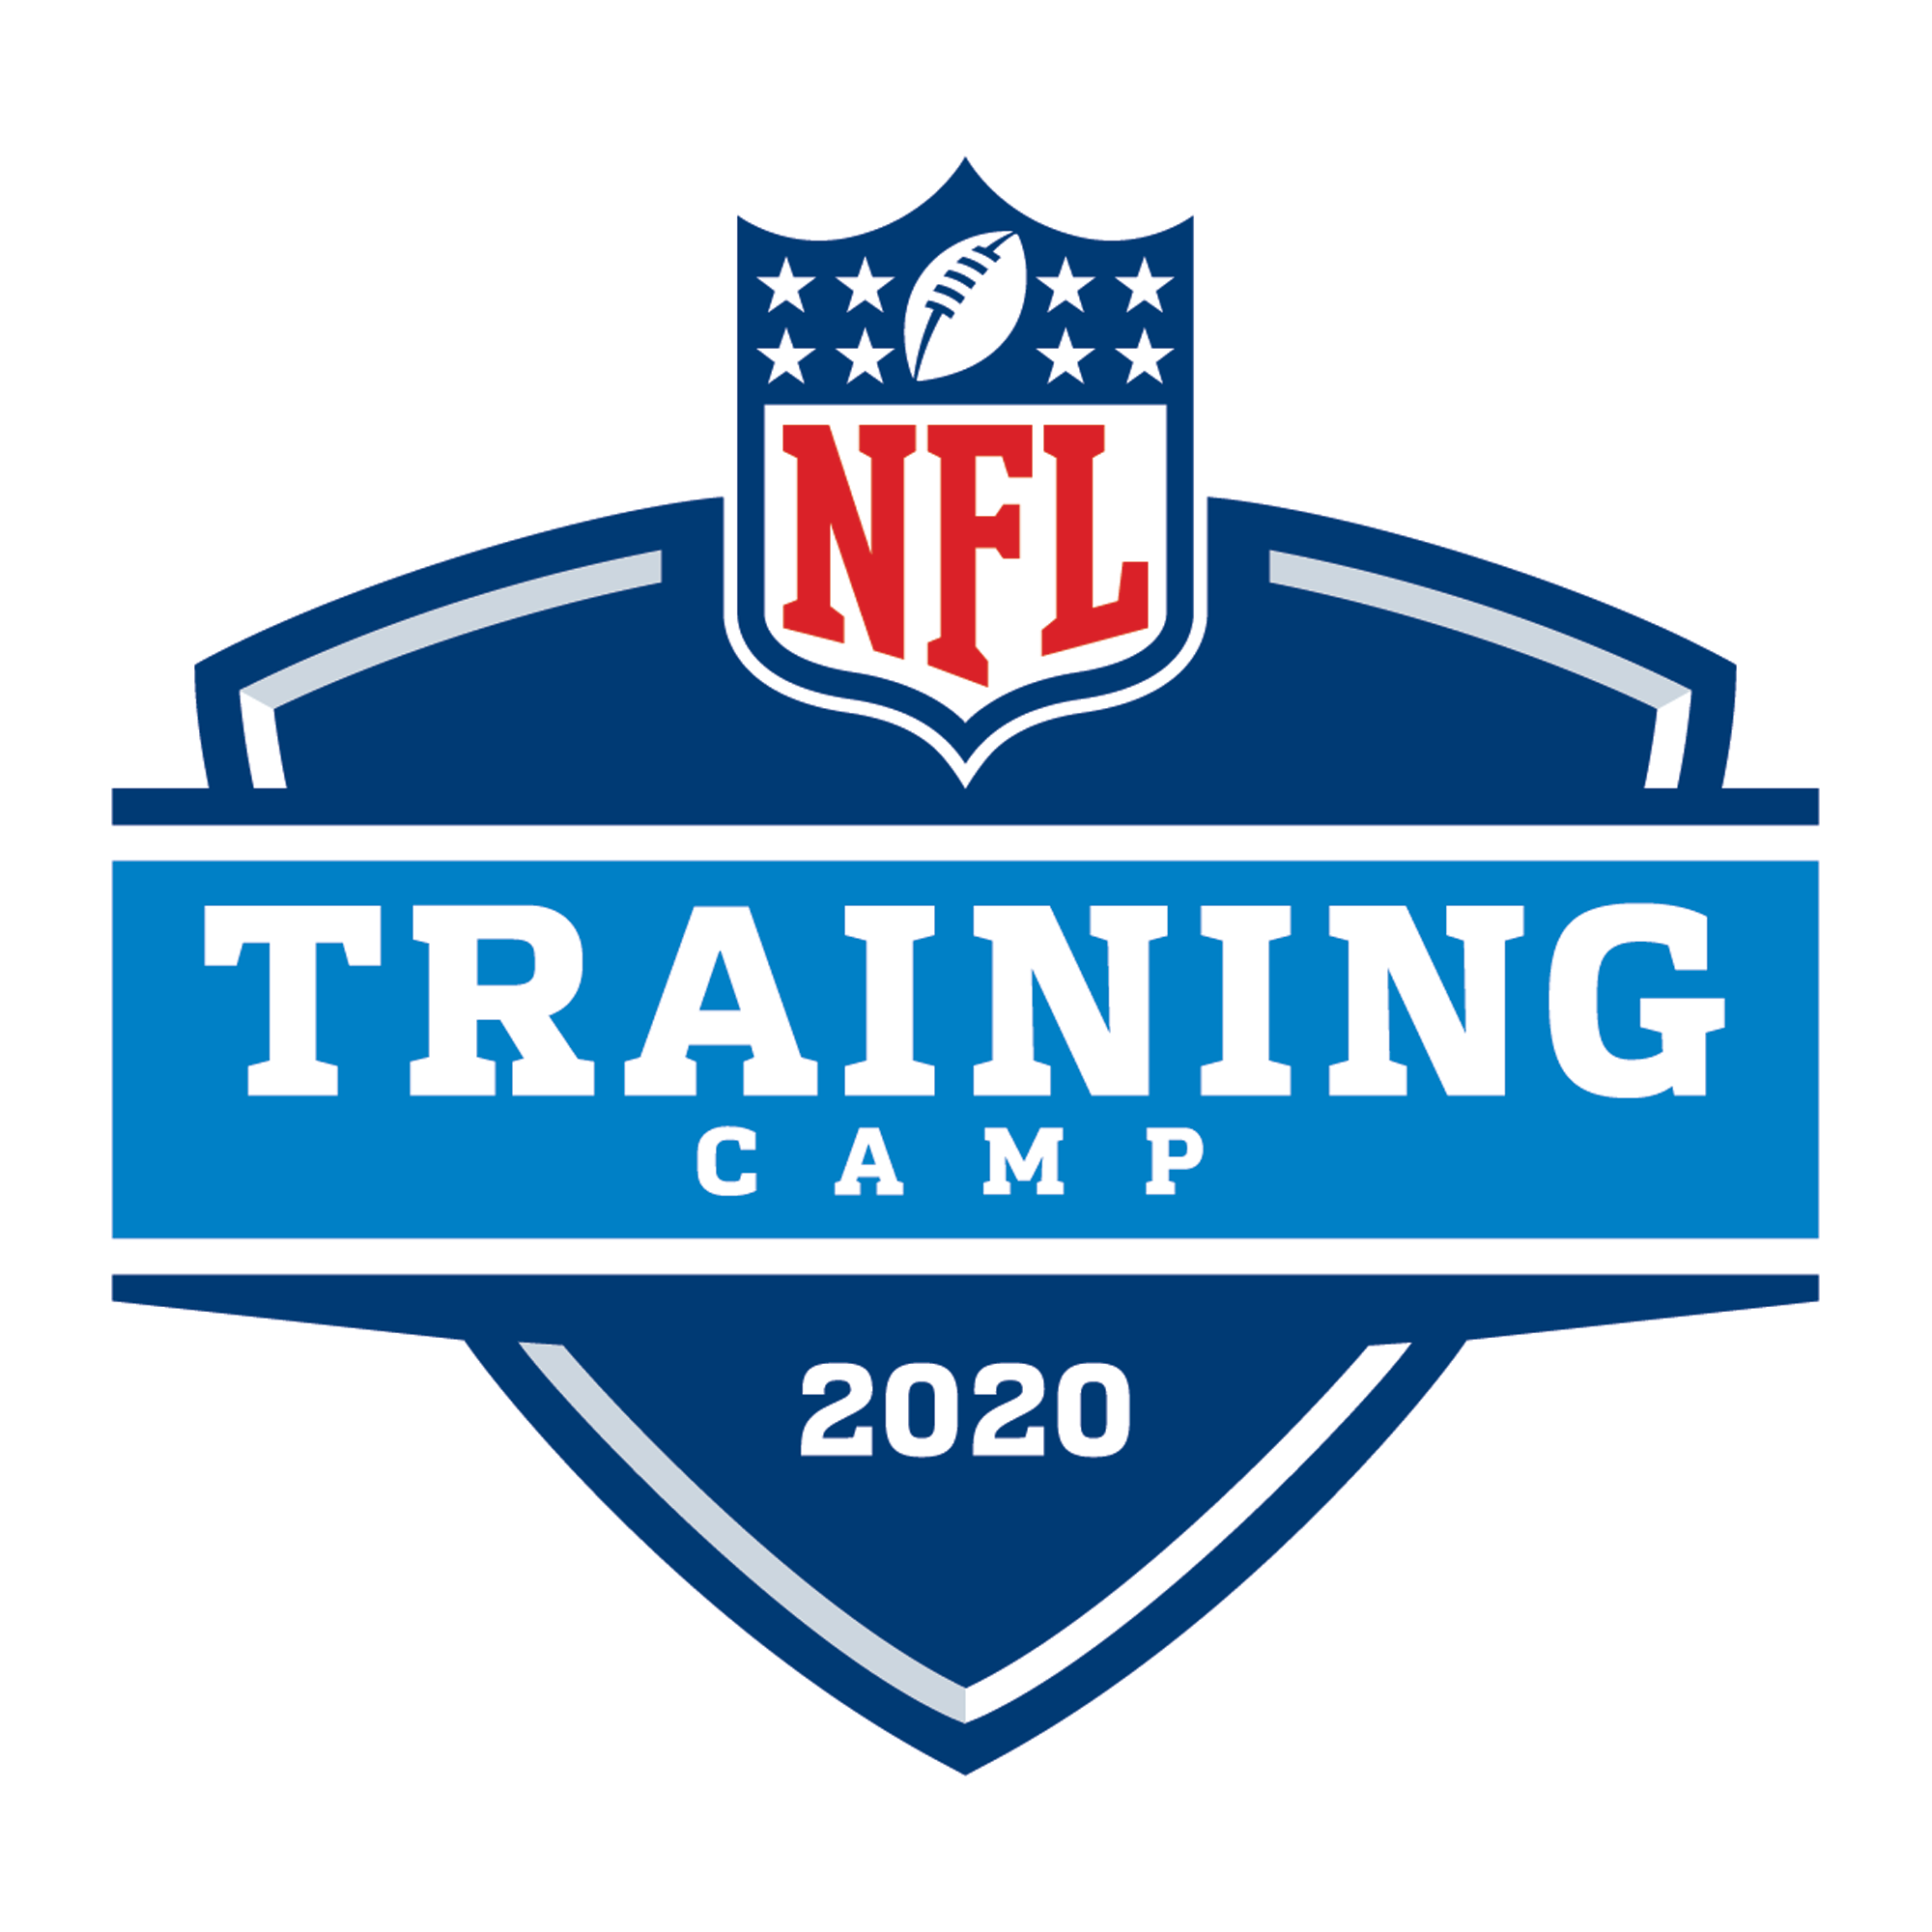 NFL Training Camp 2020 Live Coverage on NFL Network